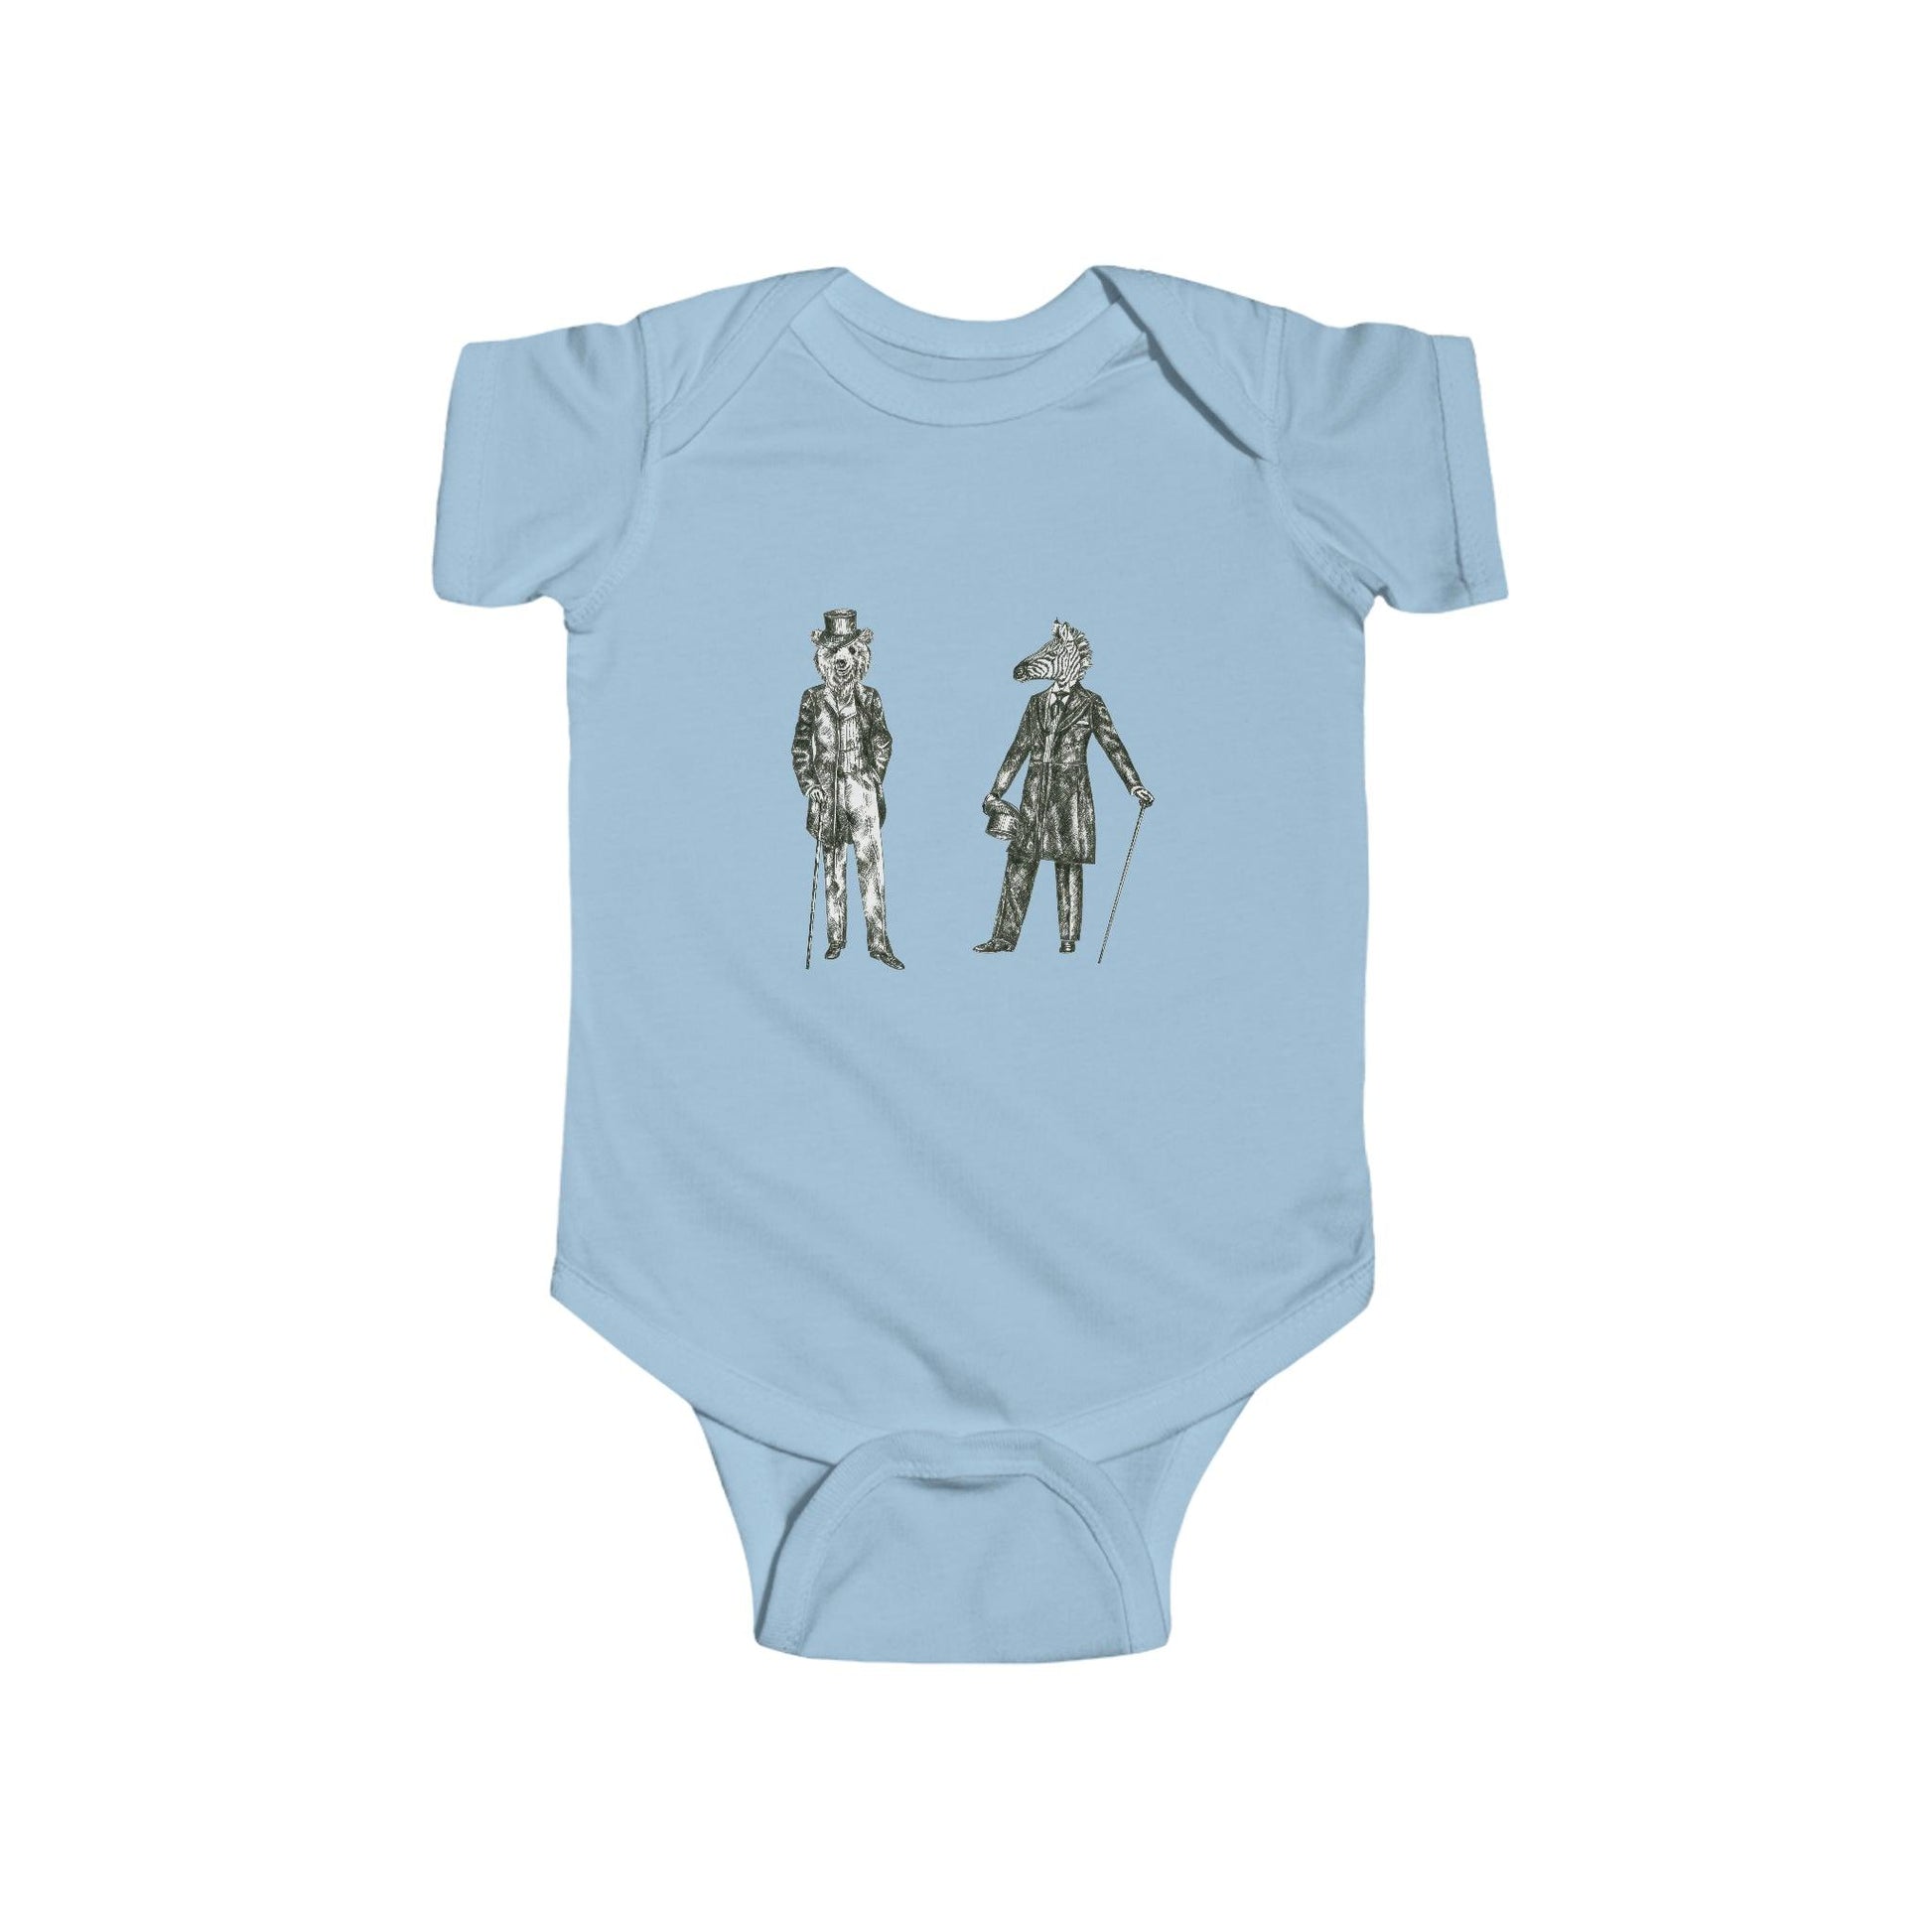 Infant Baby Chatting Graphic Jersey Bodysuit Onesie - Brix + Bailey